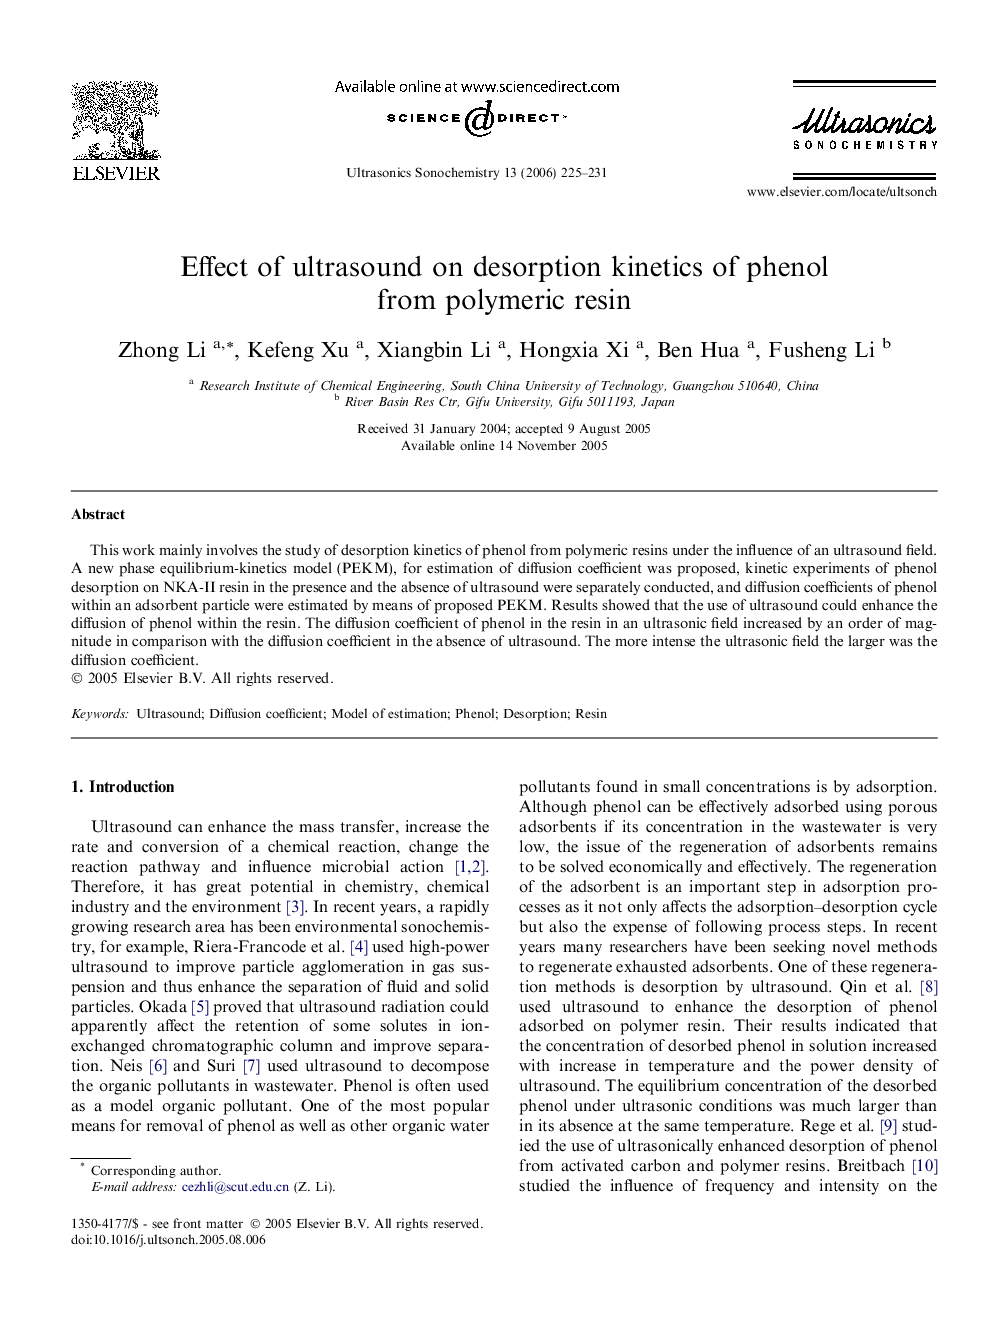 Effect of ultrasound on desorption kinetics of phenol from polymeric resin